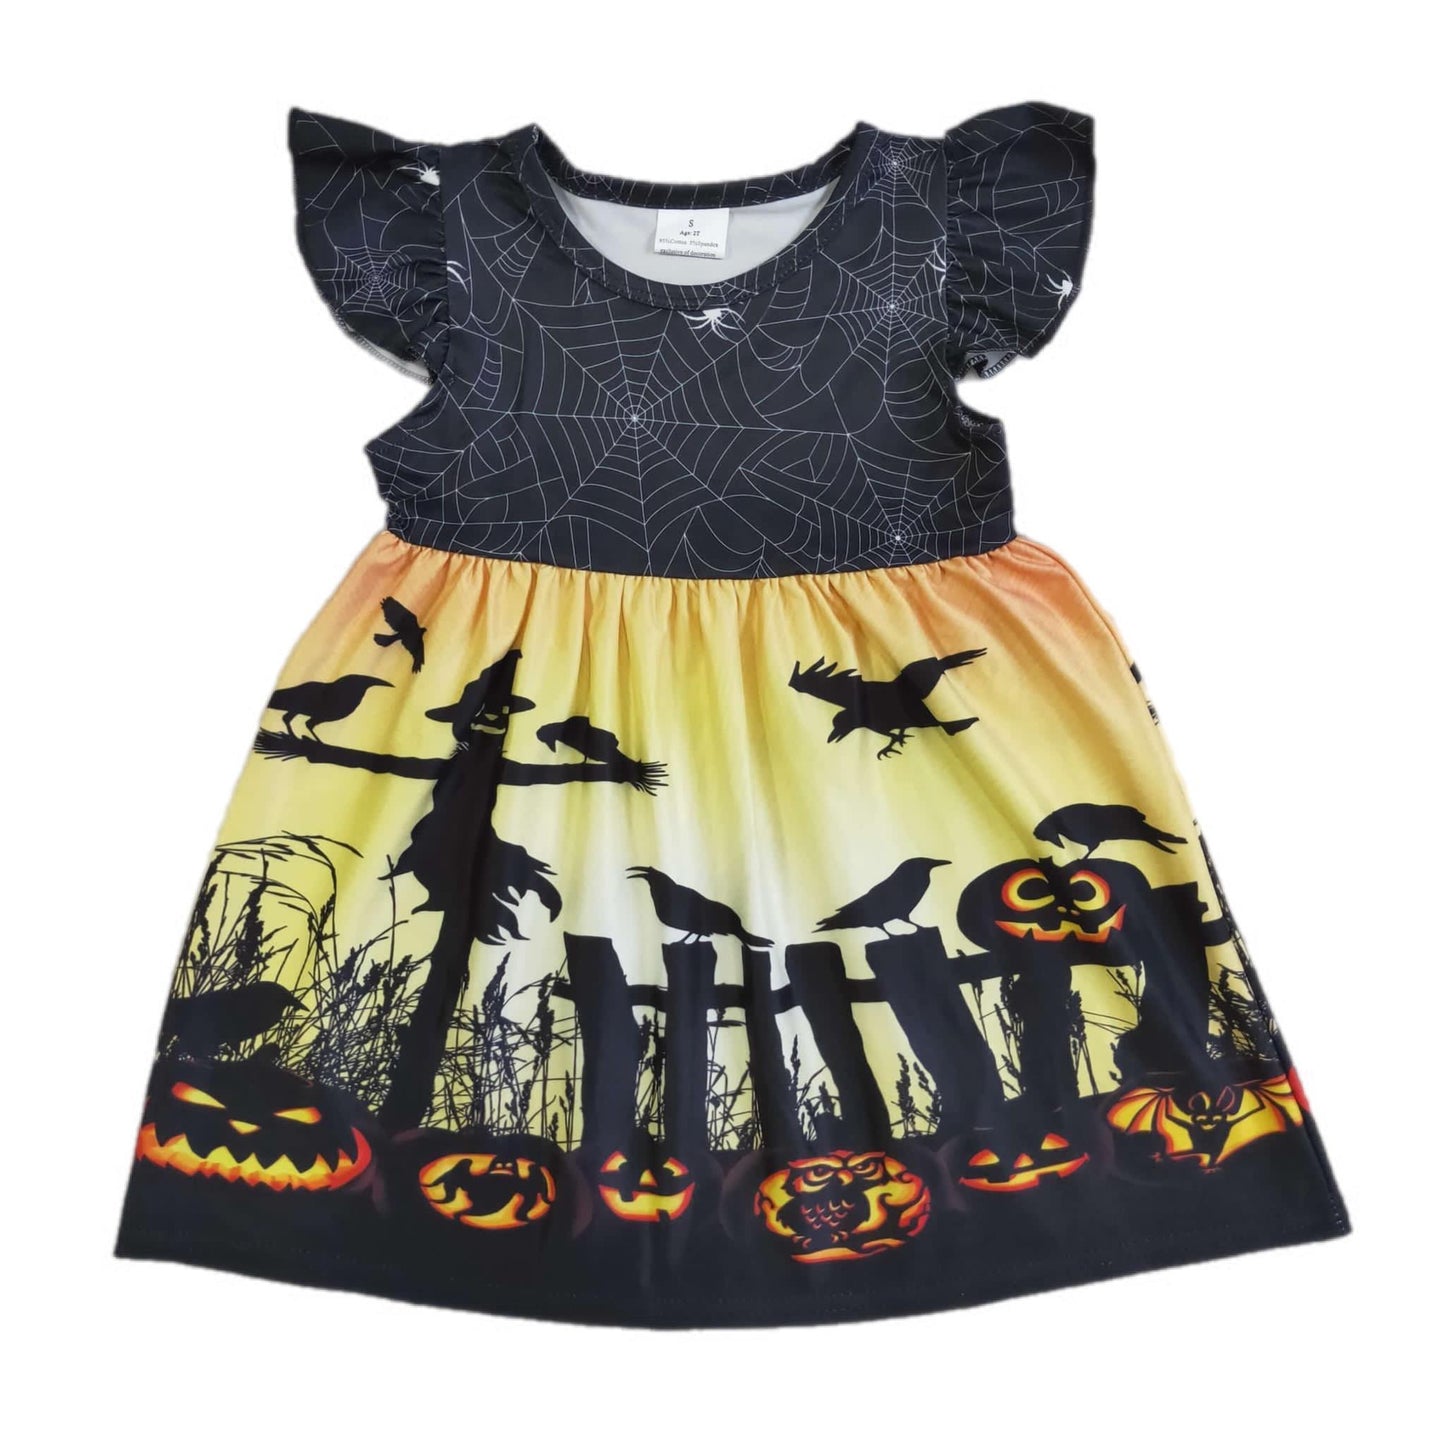 ᴡᴇᴇᴋʟʏ ᴘʀᴇ ᴏʀᴅᴇʀ Halloween Spooky Pumpkin Dress